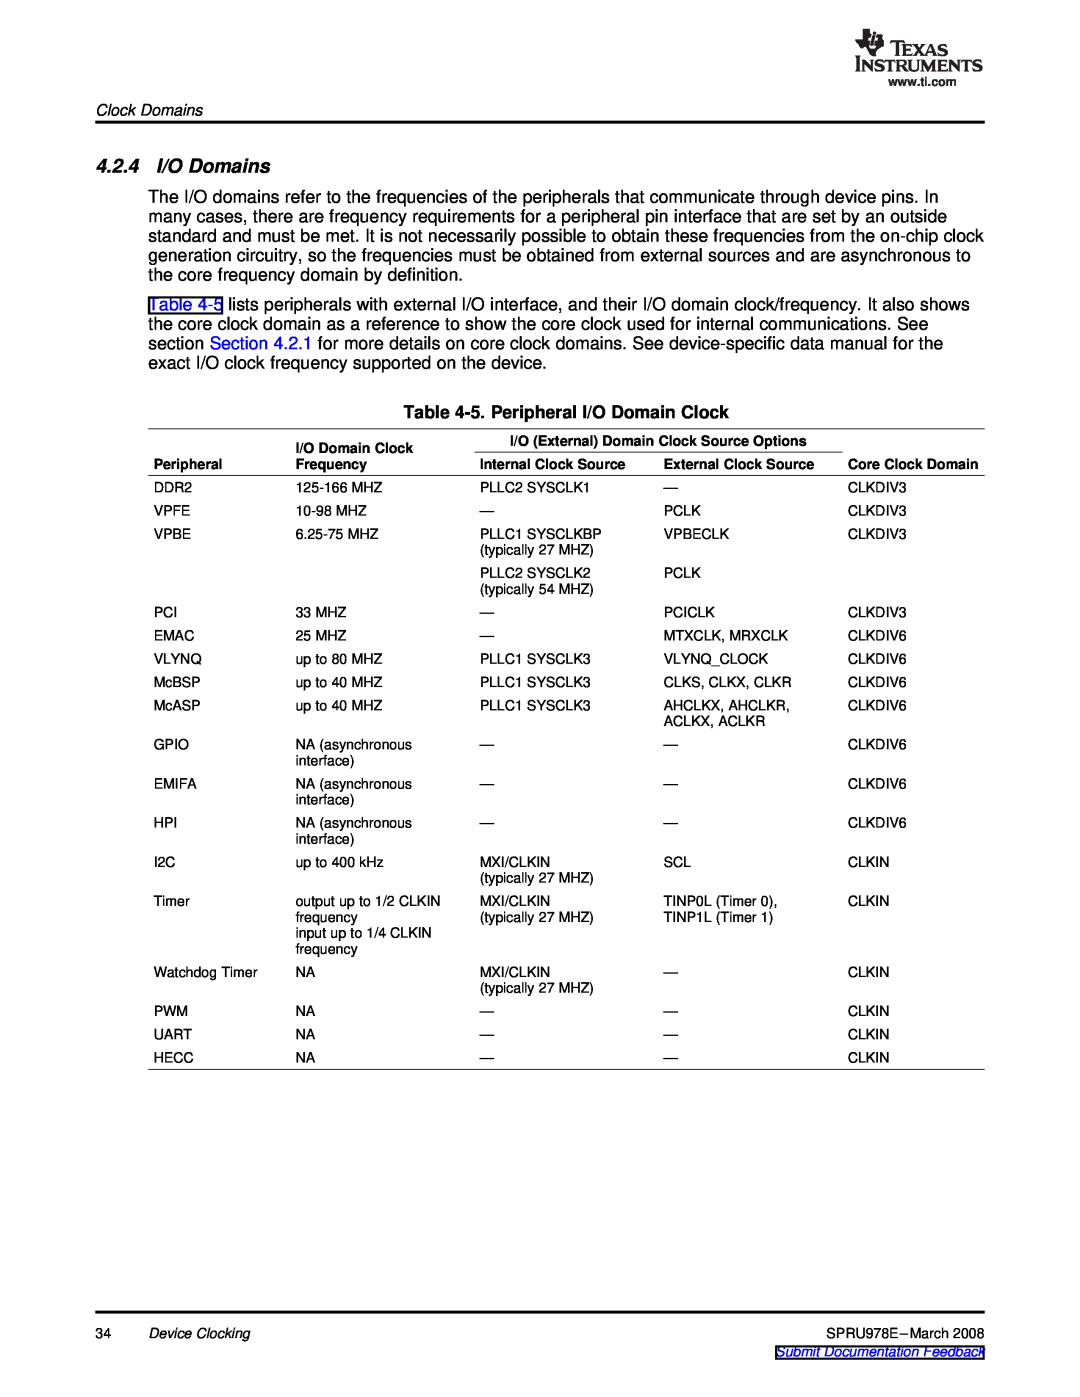 Texas Instruments TMS320DM643x manual 4.2.4 I/O Domains, 5. Peripheral I/O Domain Clock 